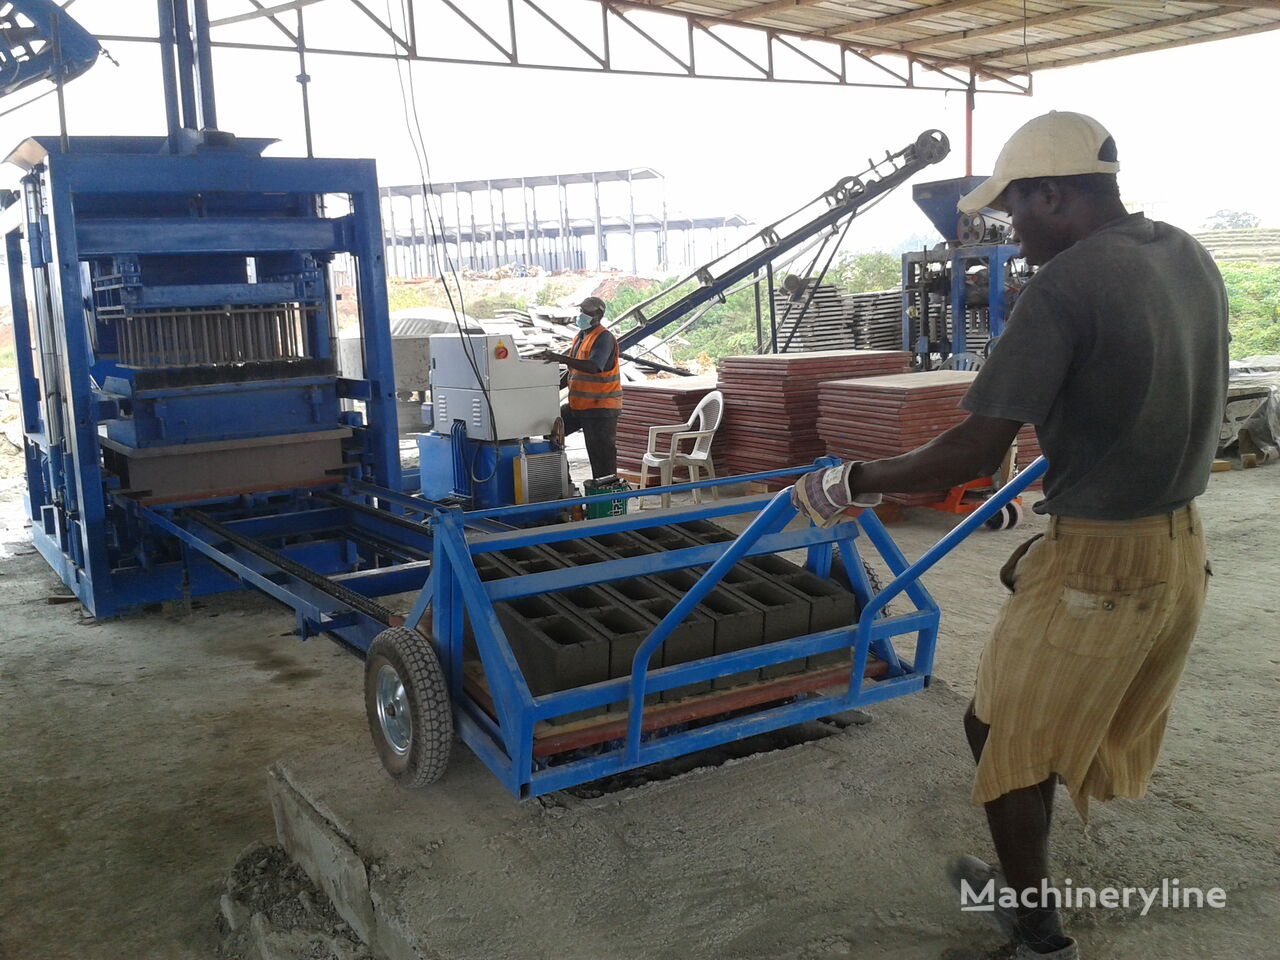 Conmach BlockKing-25MS Concrete Block Making Machine -12.000 units/shift máquina para fabricar bloques de hormigón nueva